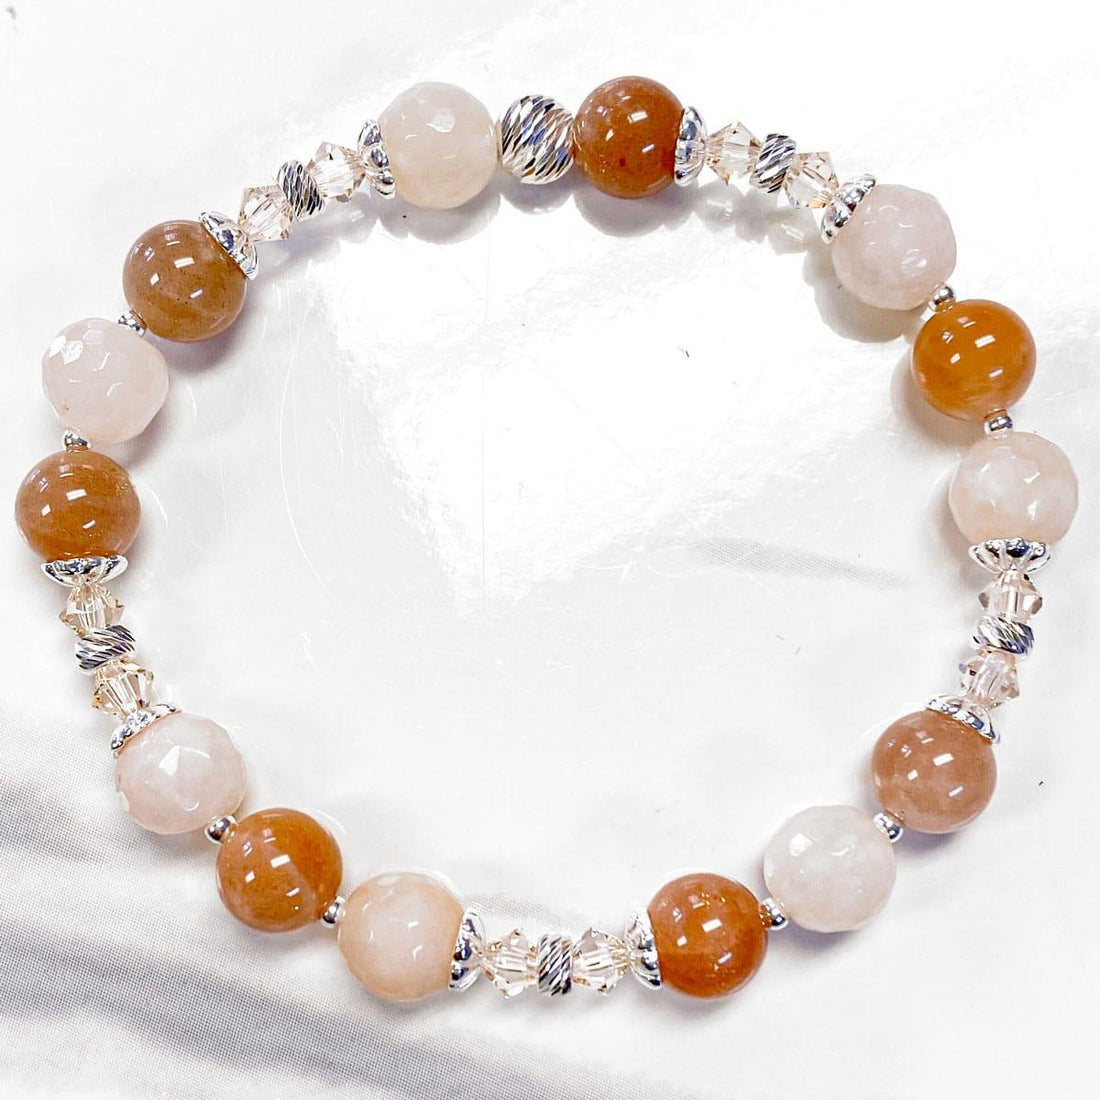 Peach Sunstone Gemstone Bracelet Kit Instructions - Too Cute Beads